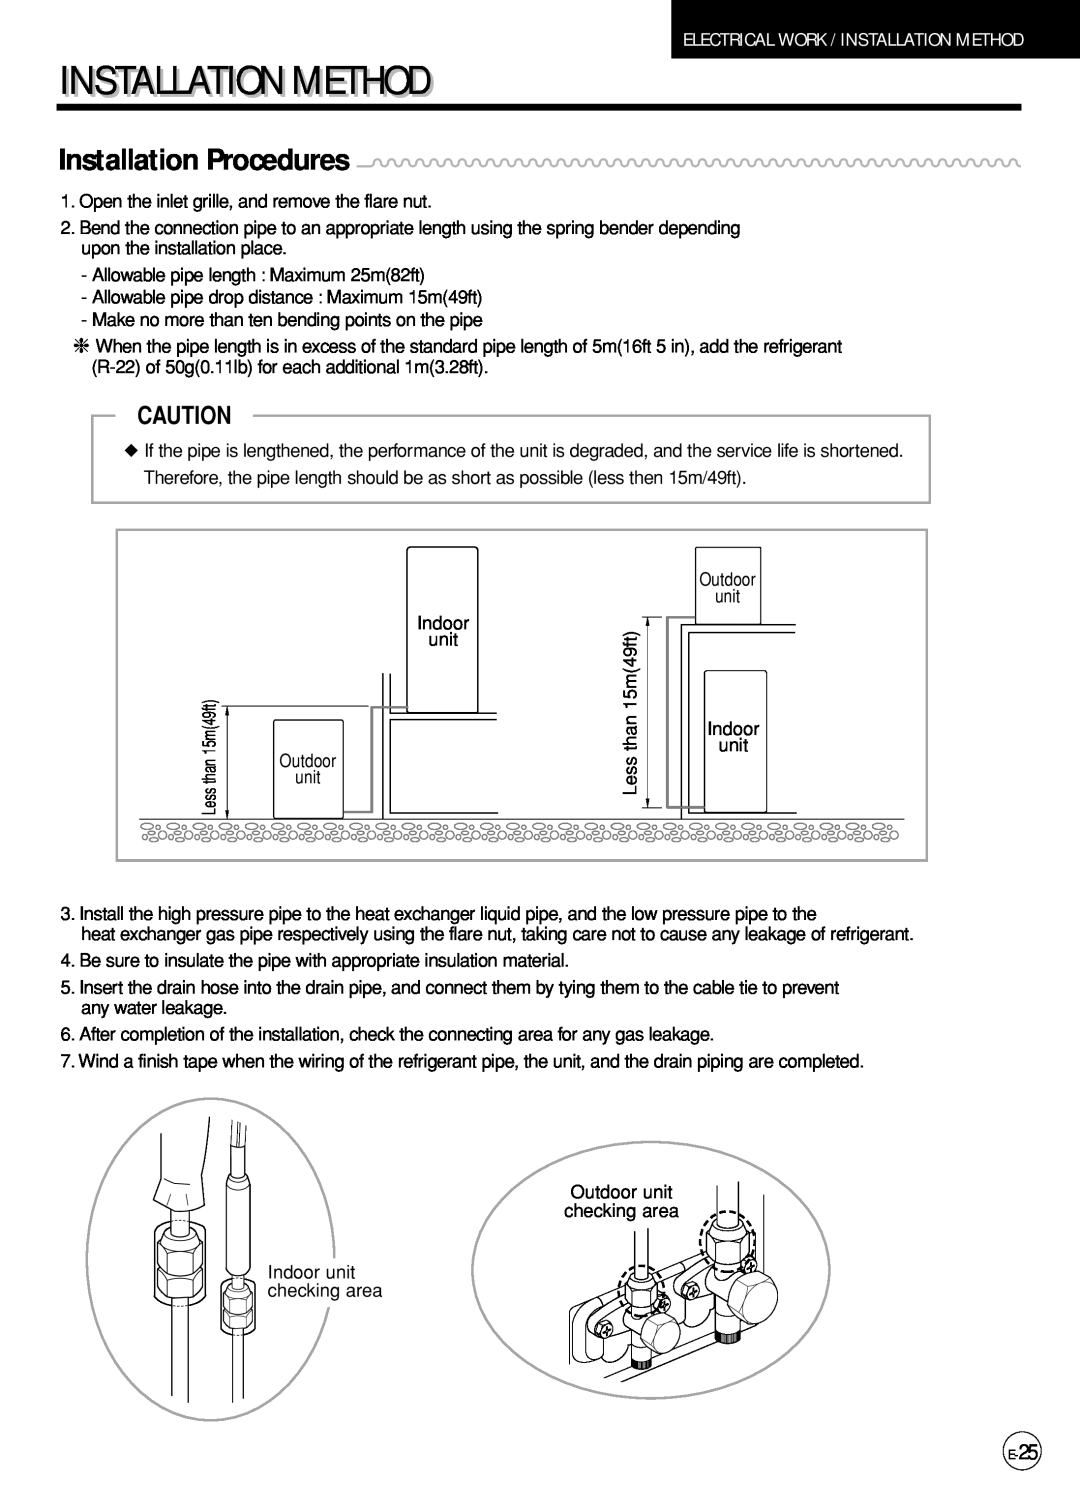 Samsung AP500PF installation manual Installationi Method, Installation Procedures, Electrical Work / Installation Method 